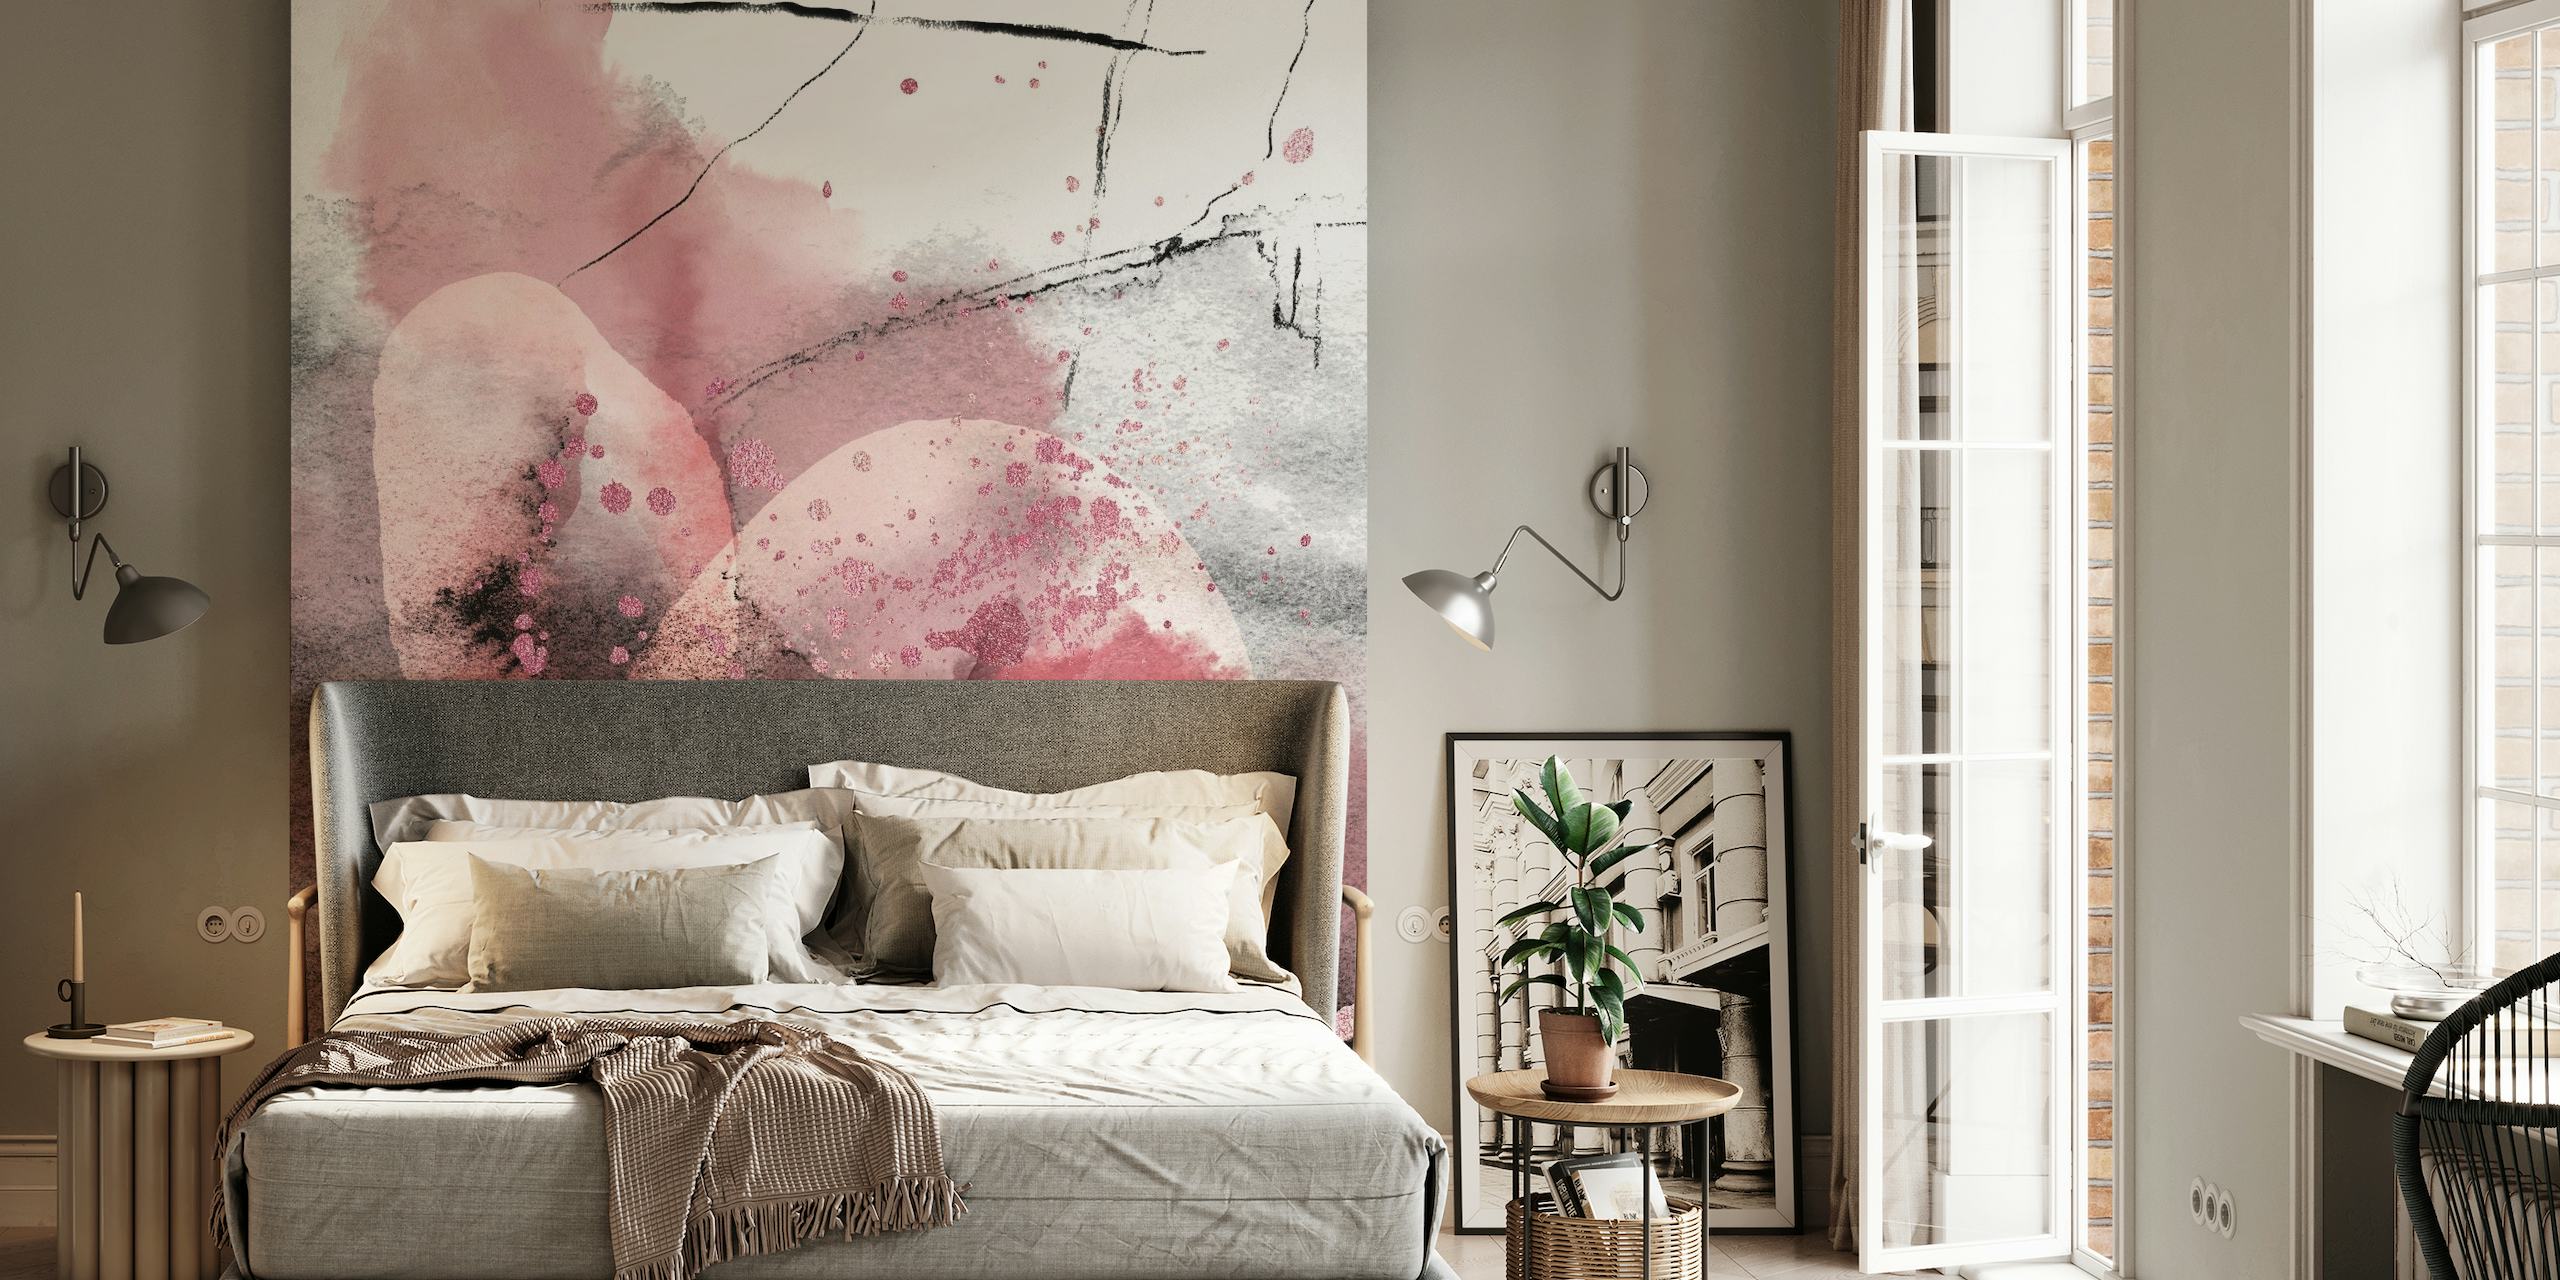 Abstrakt rosa-tonet vægmaleri med lyserøde og grå akvarelmønstre og dristige blækstrøg